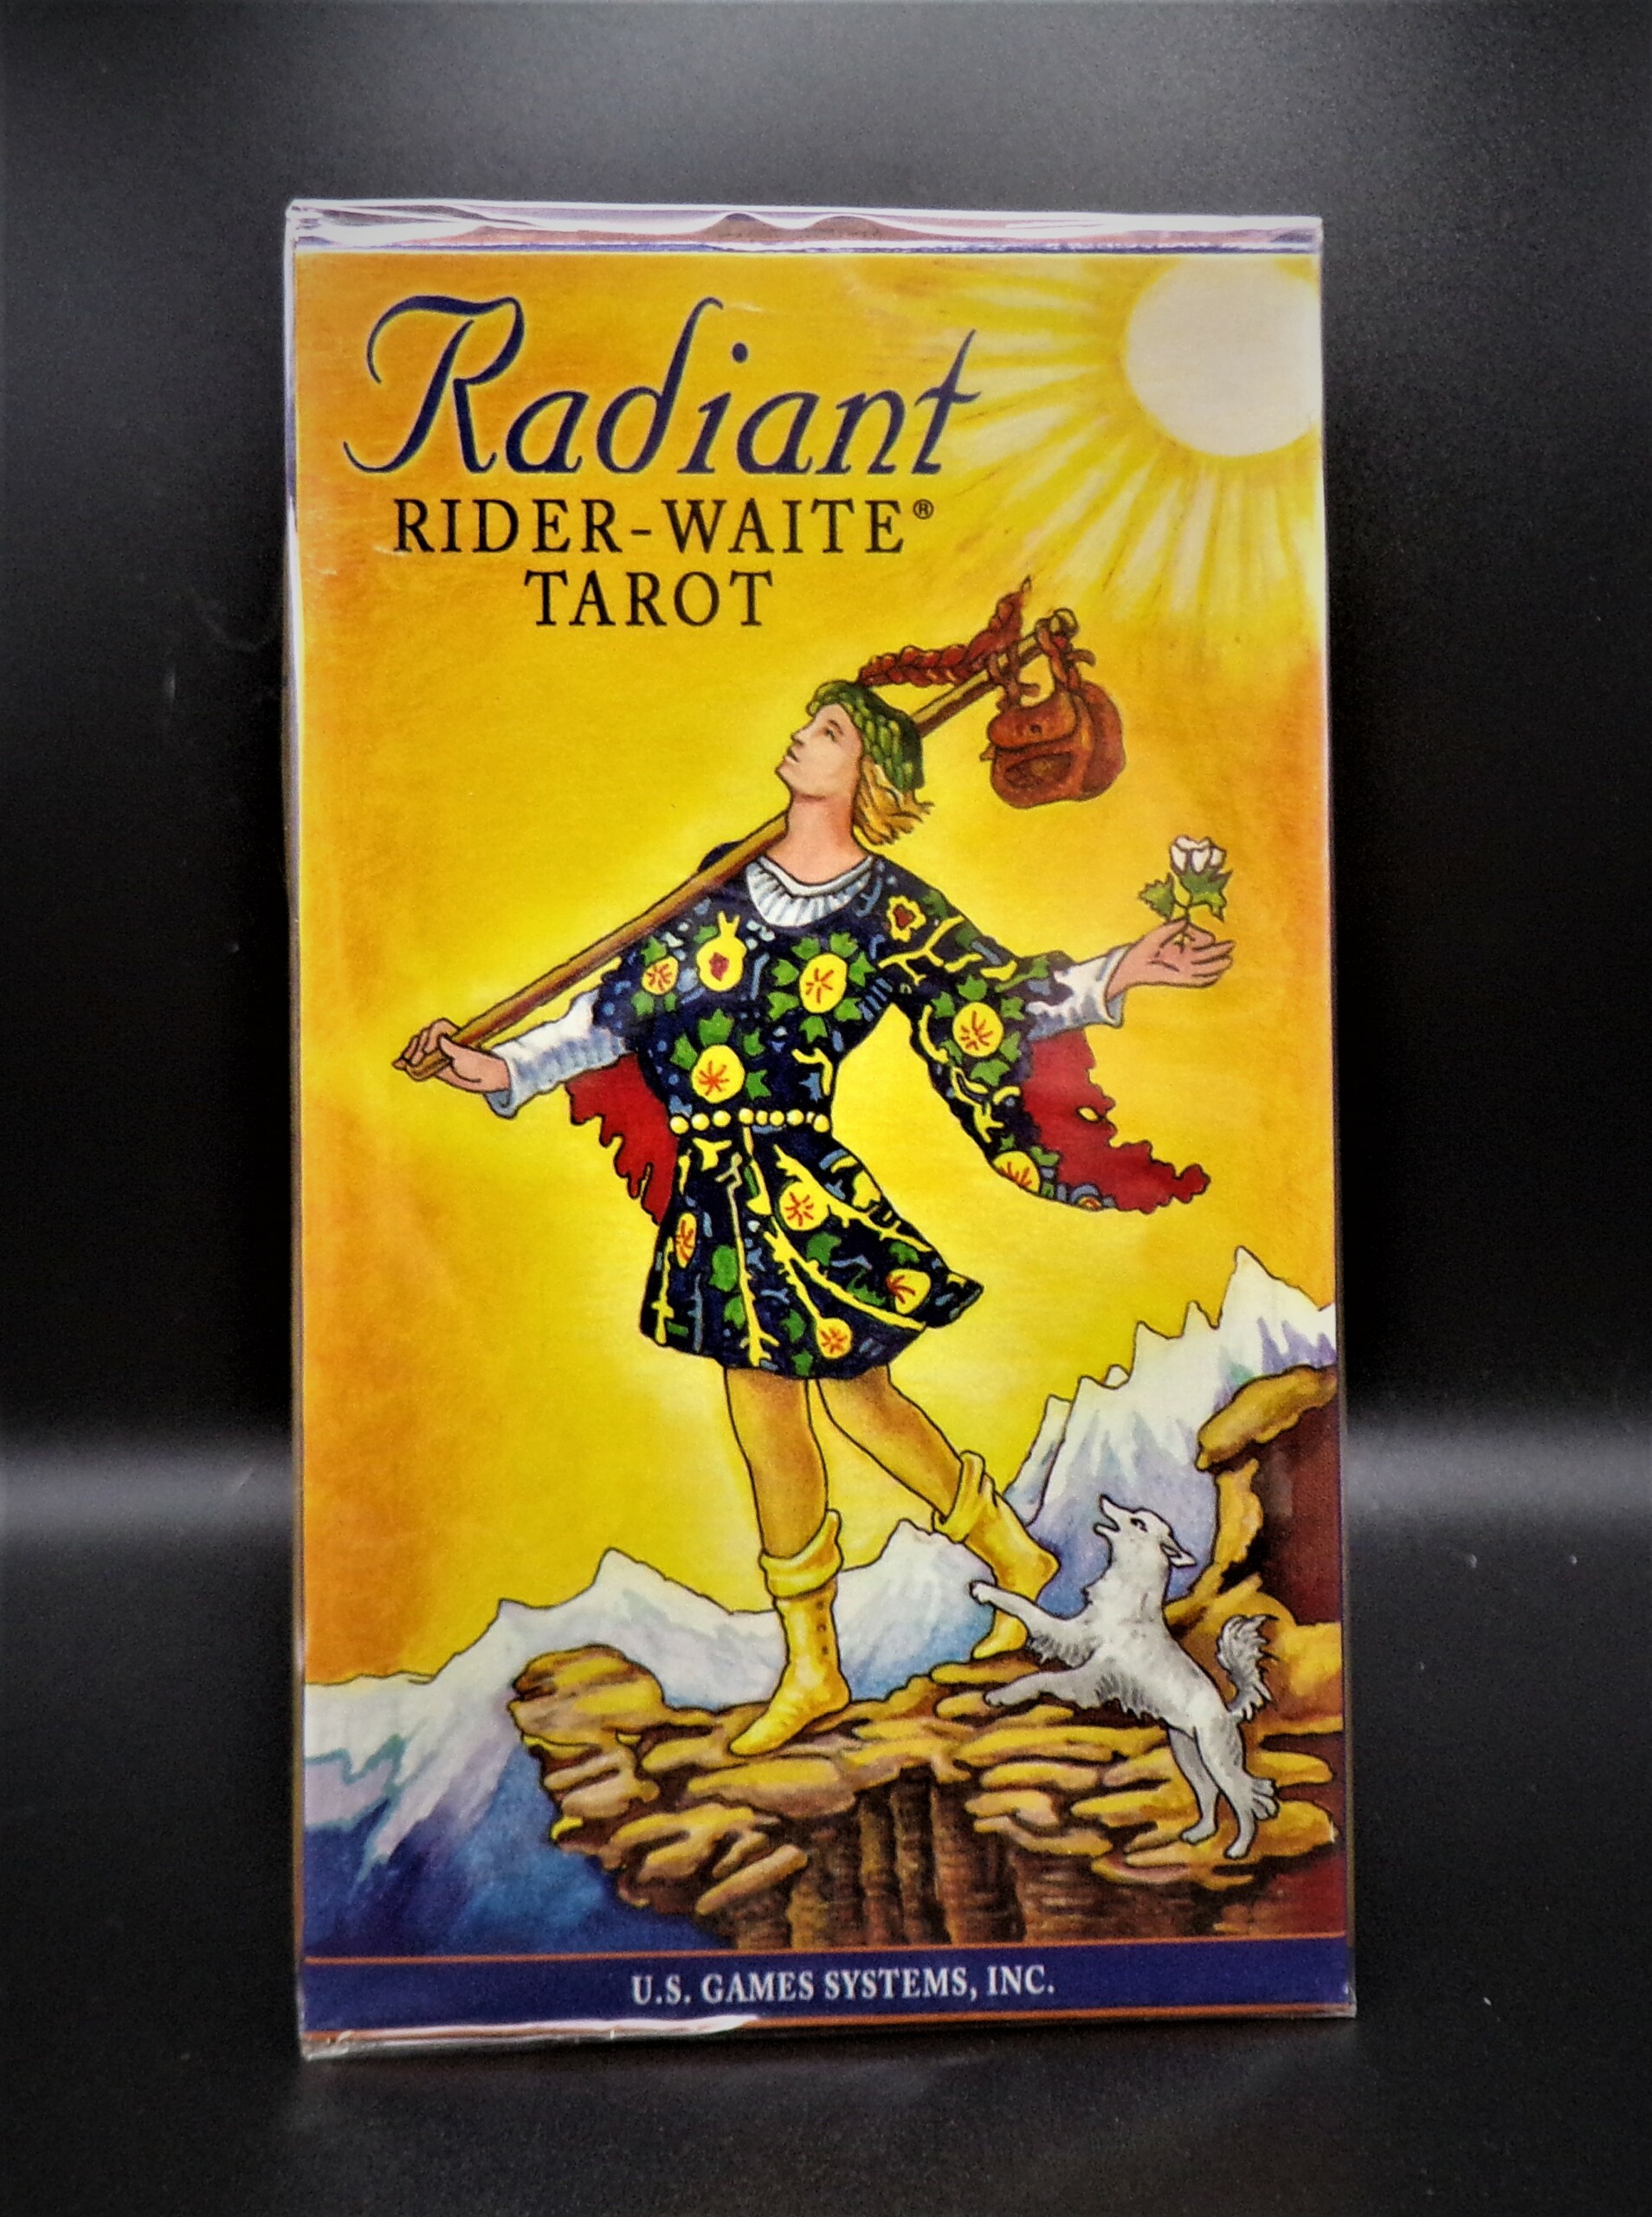 Radiant Rider-Waite Tarot